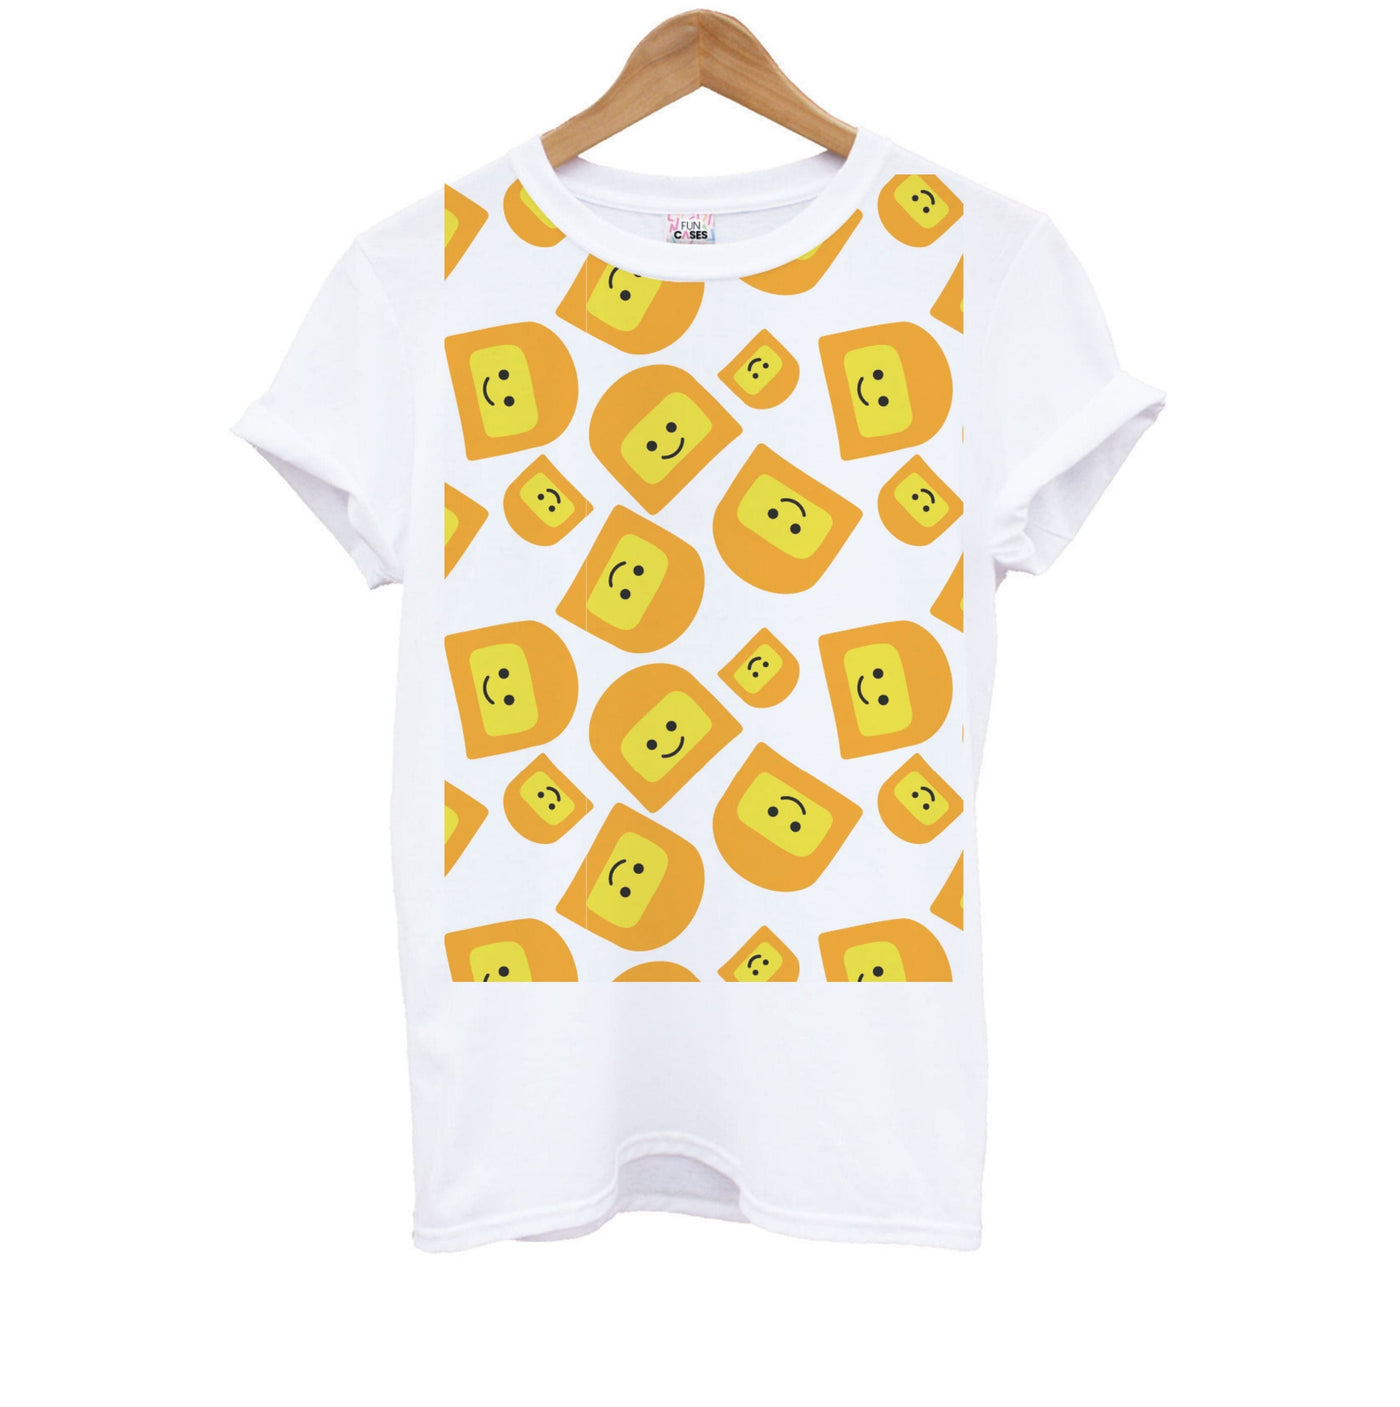 Face Collage - Bricks Kids T-Shirt